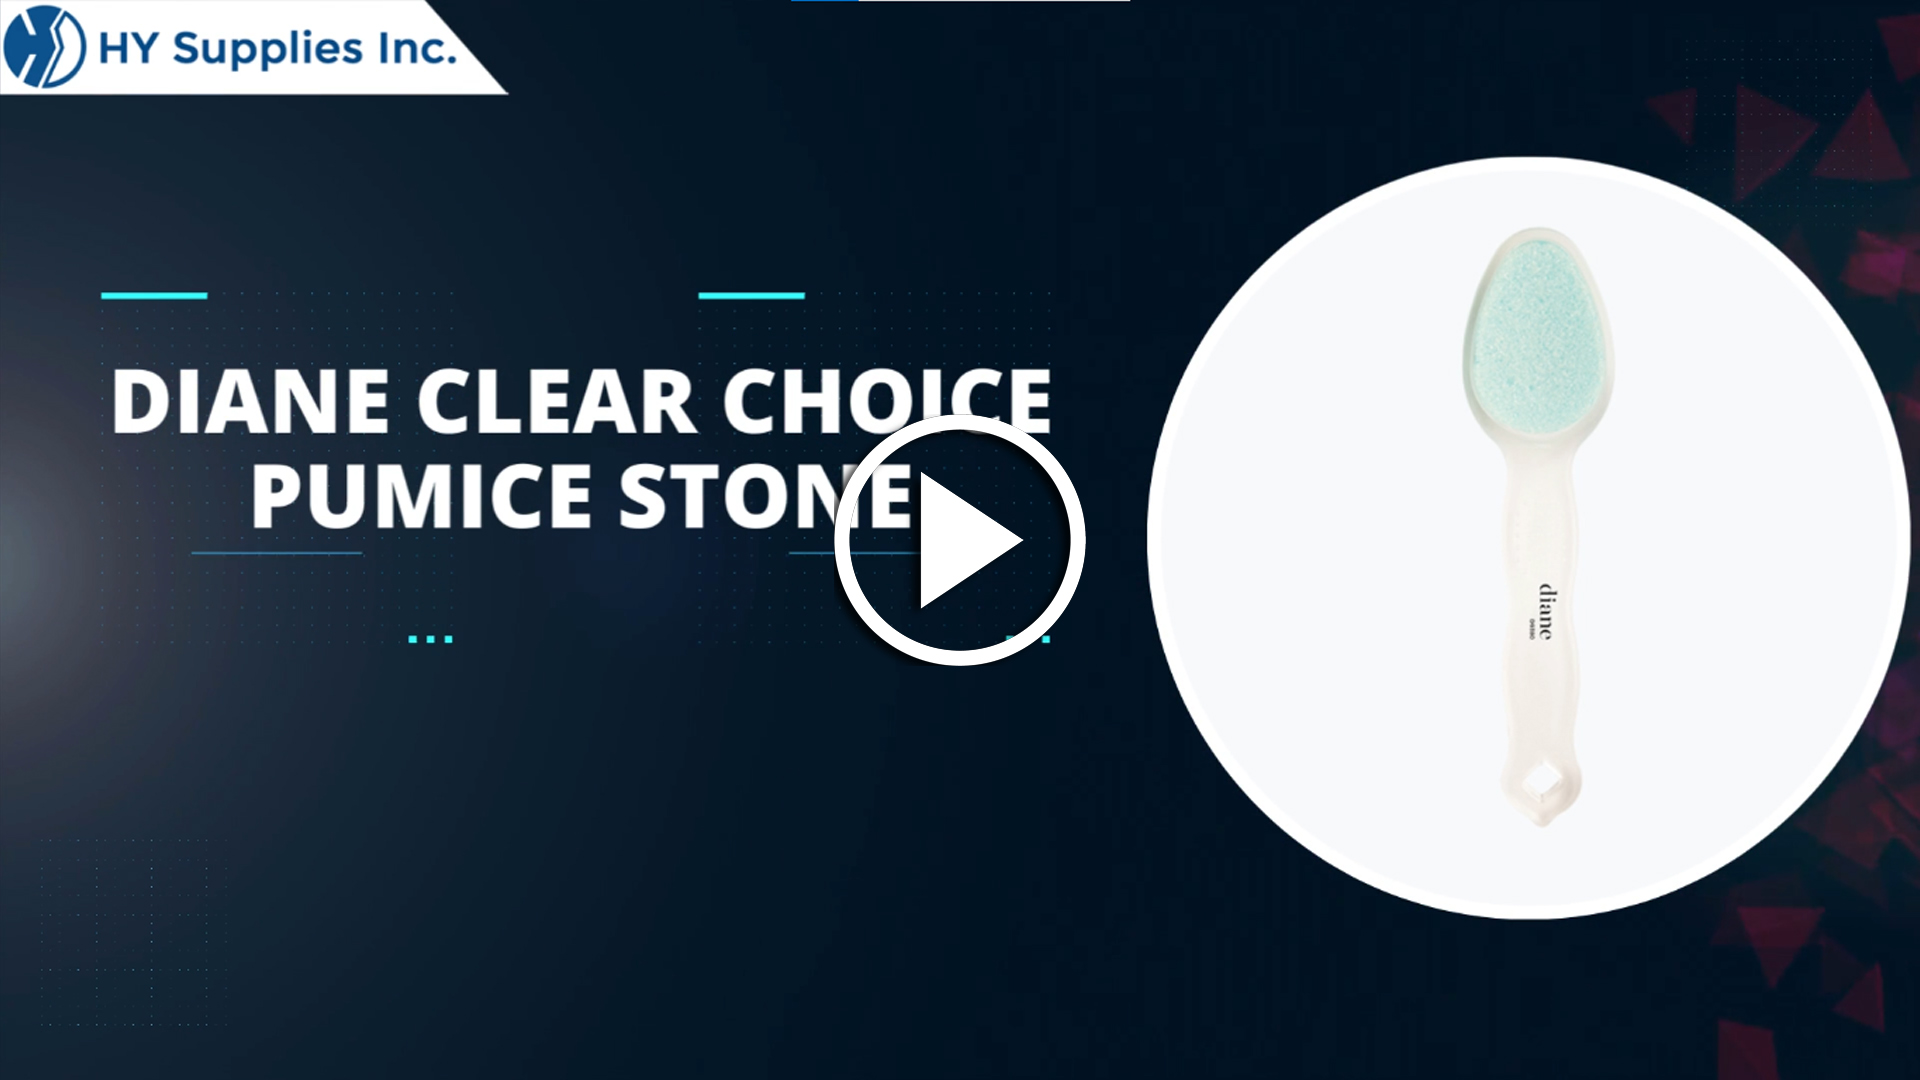 Diane Clear Choice Pumice Stone